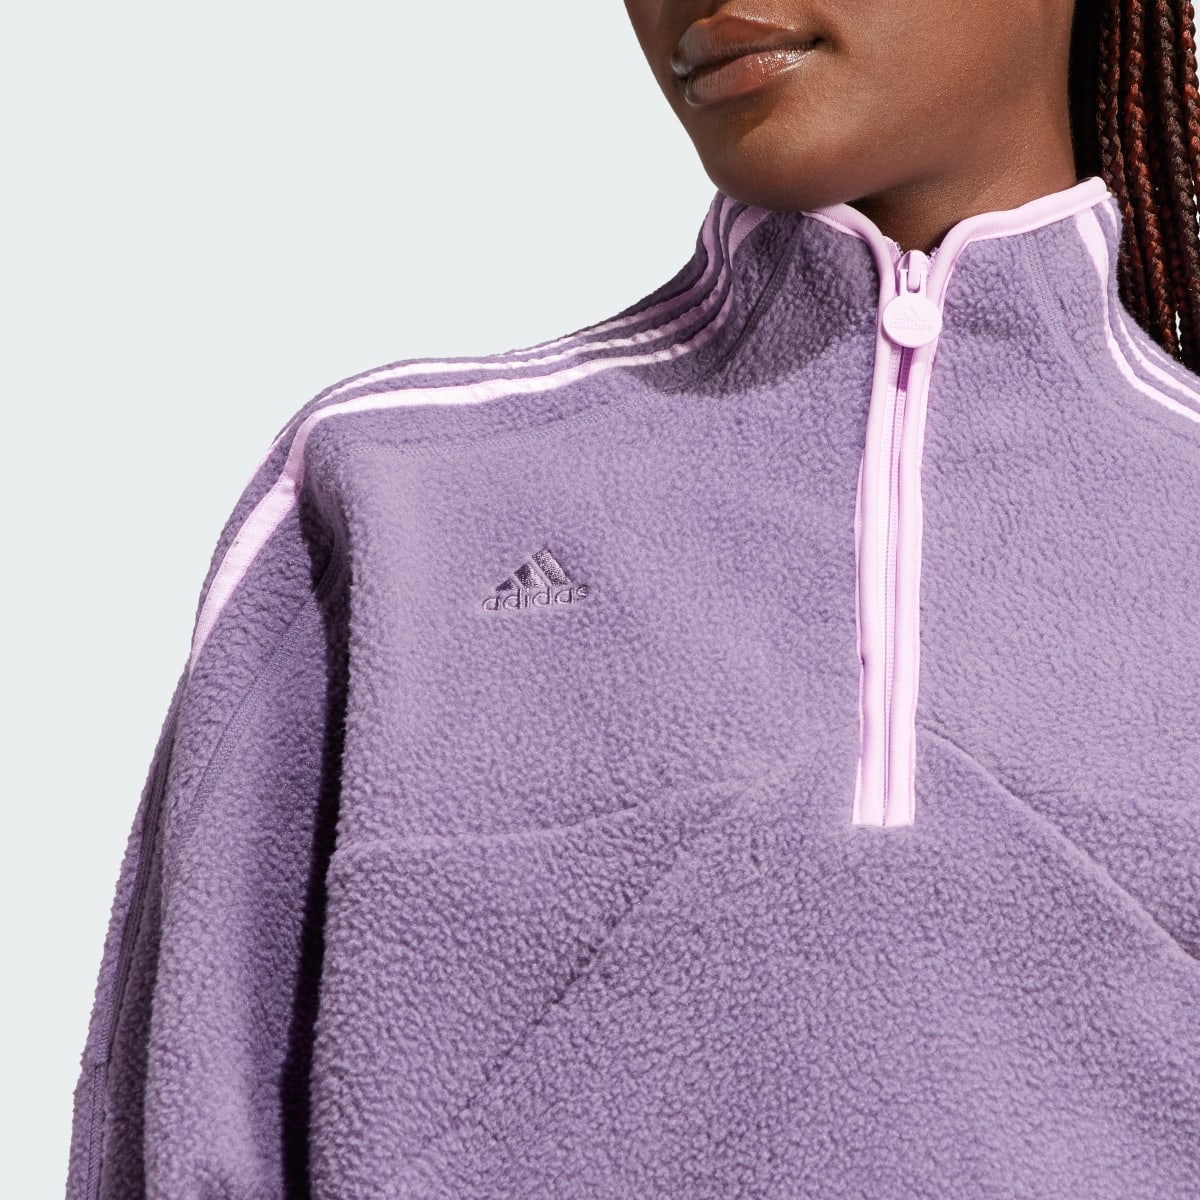 Adidas Tiro Half-Zip Fleece Sweatshirt. 6